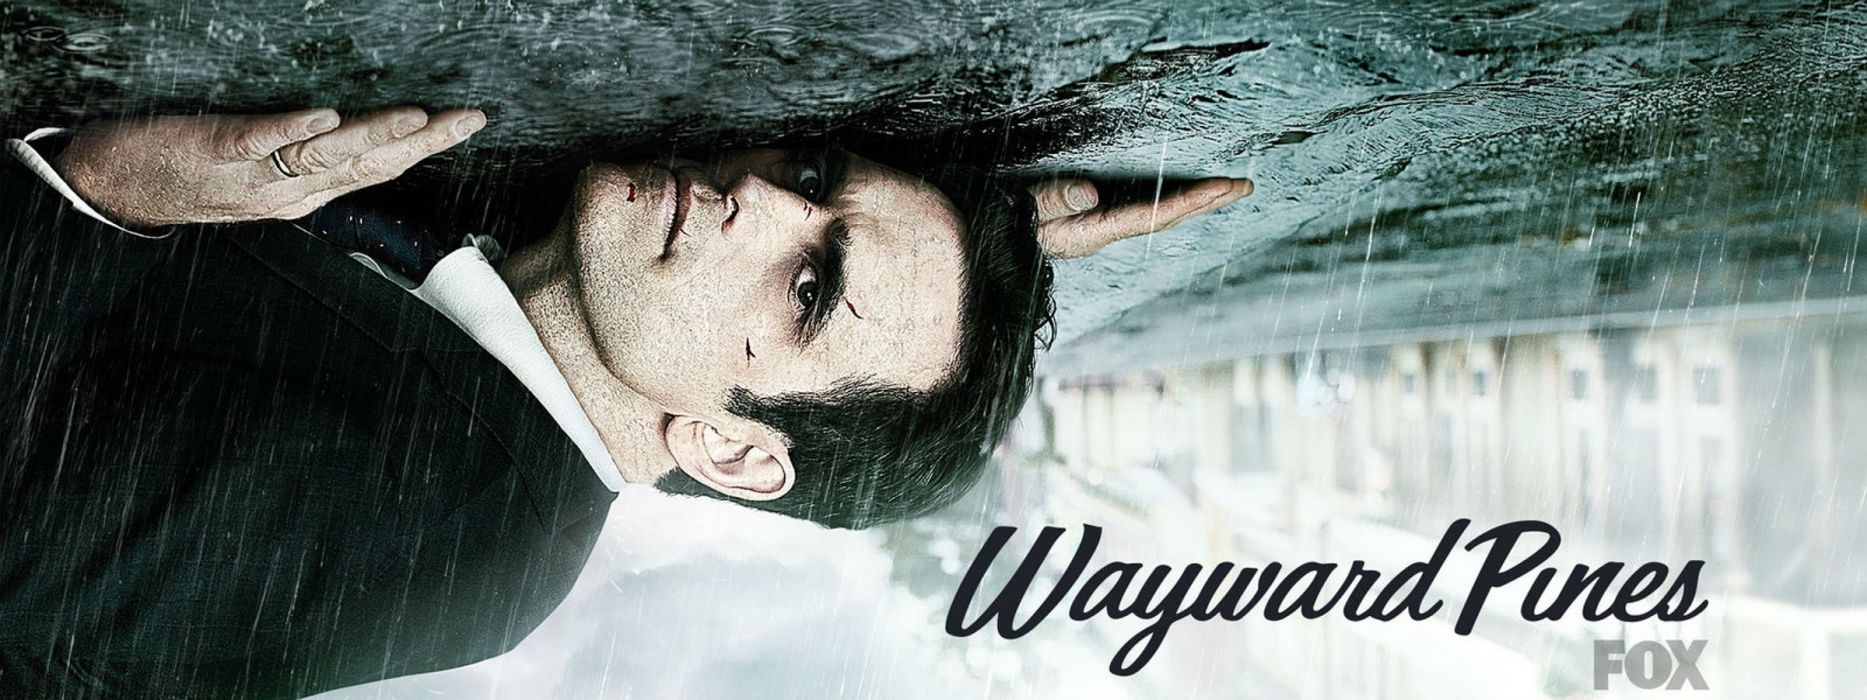 WAYWARD PINES fox series drama mystery 1wpines crime thriller poster wallpaperx900